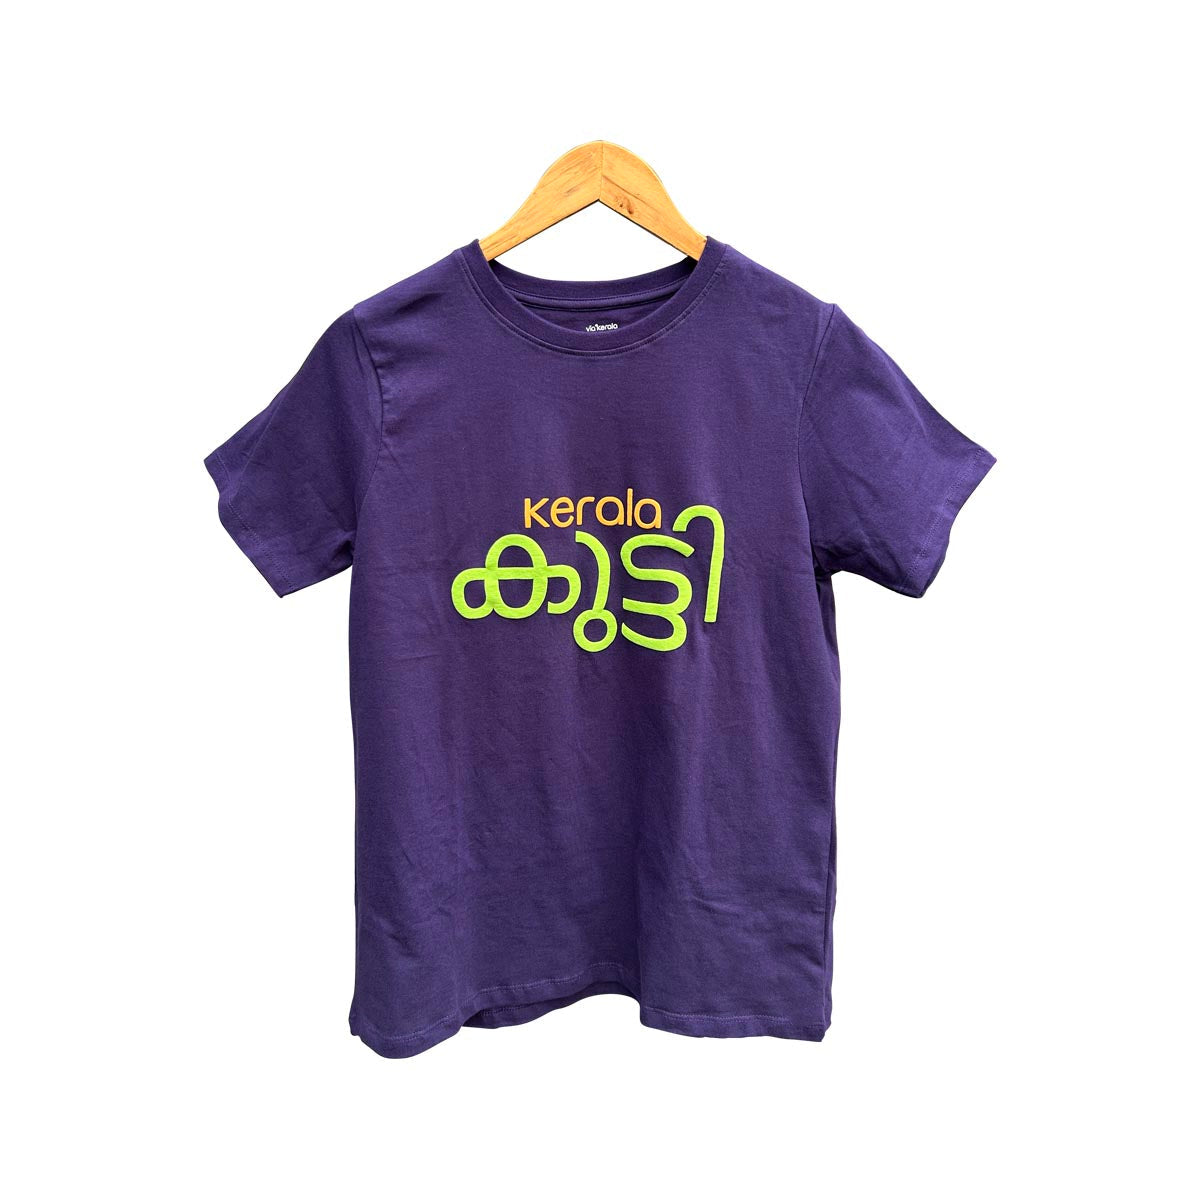 Kerala Kutty — Kids T-shirt (Ocean Blue)